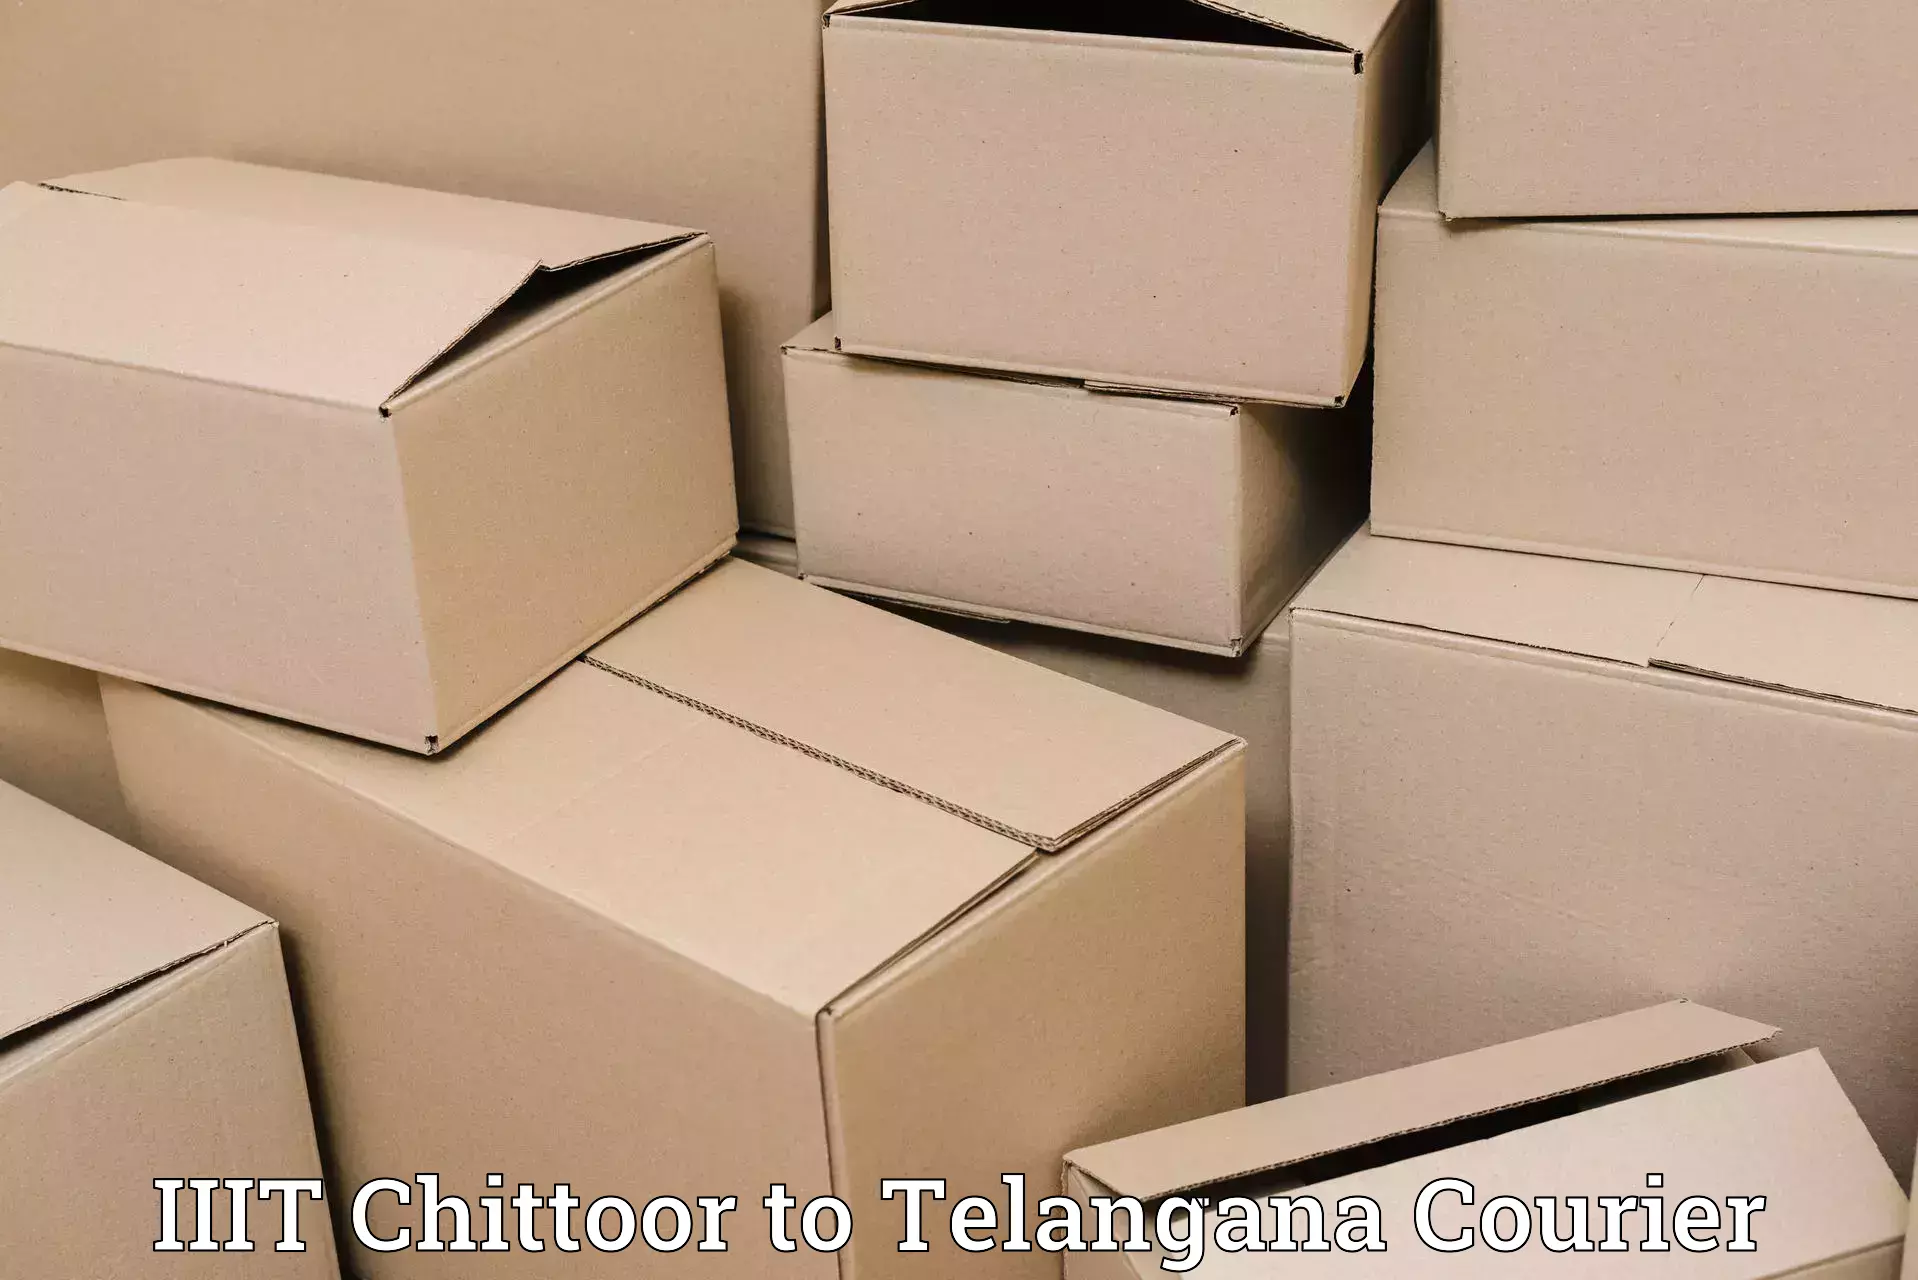 Local courier options IIIT Chittoor to University of Hyderabad